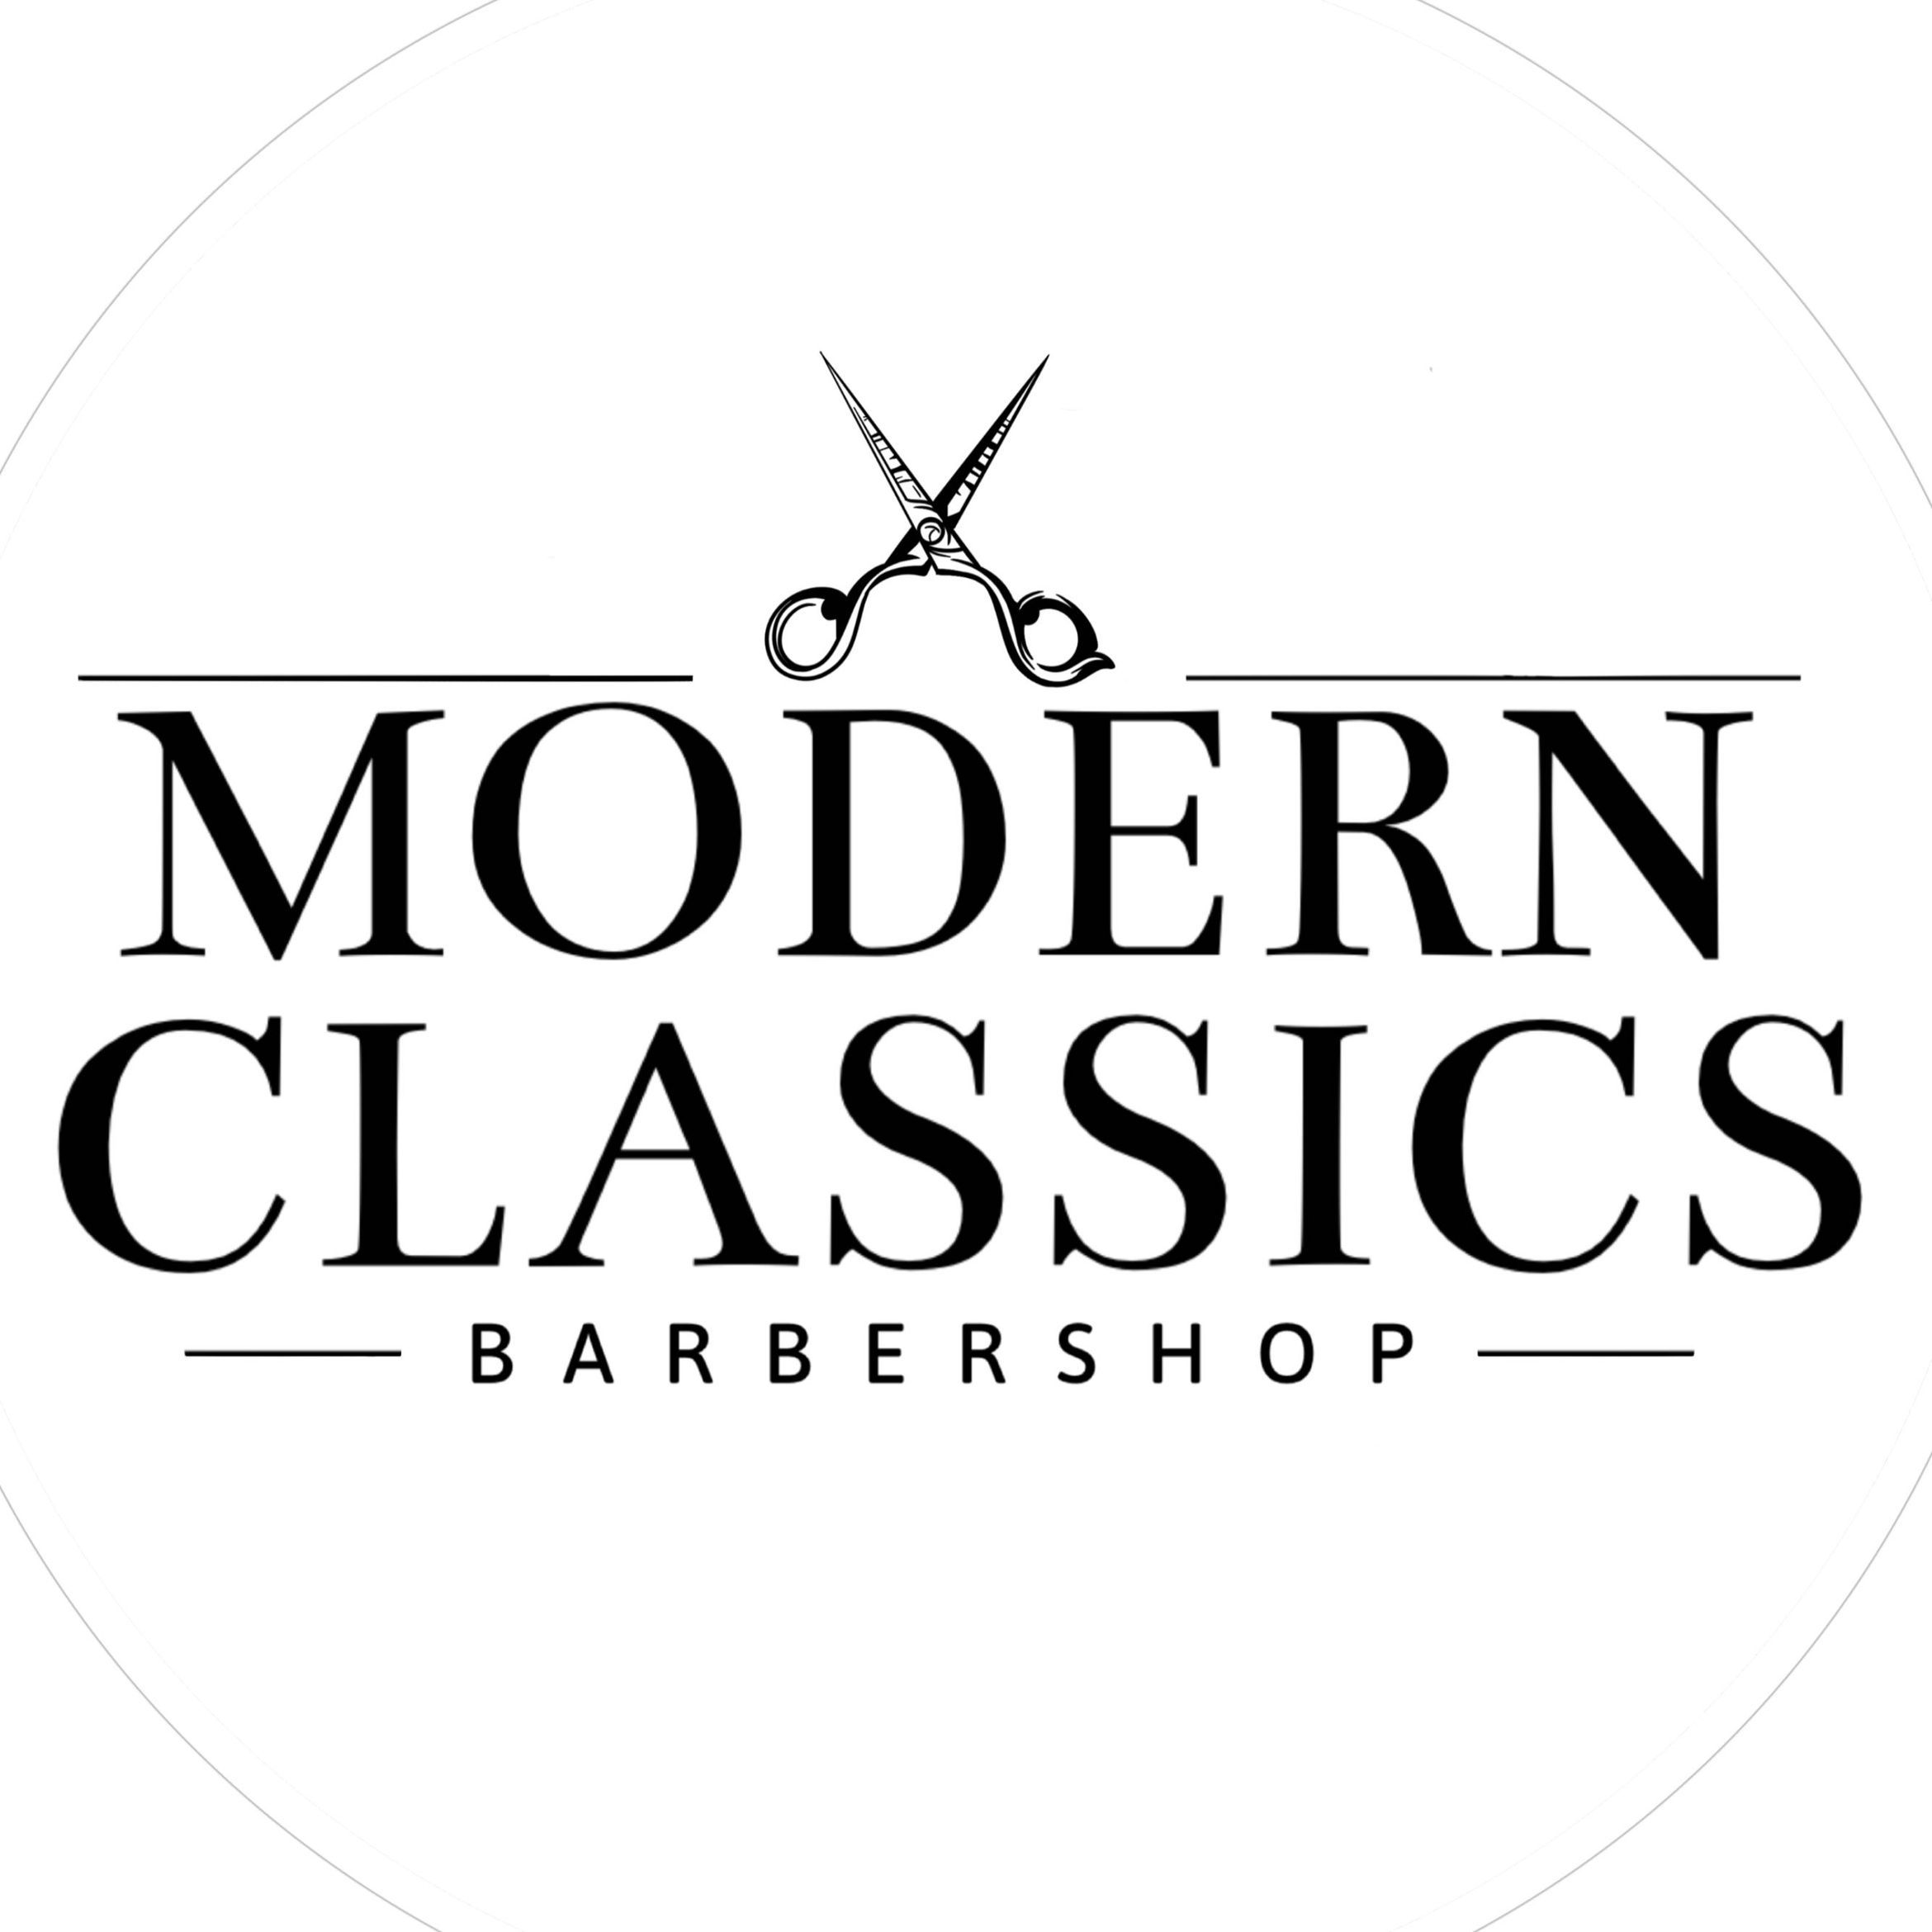 Modern Classics, 16170 leffingwell rd #3, Whittier, 90603